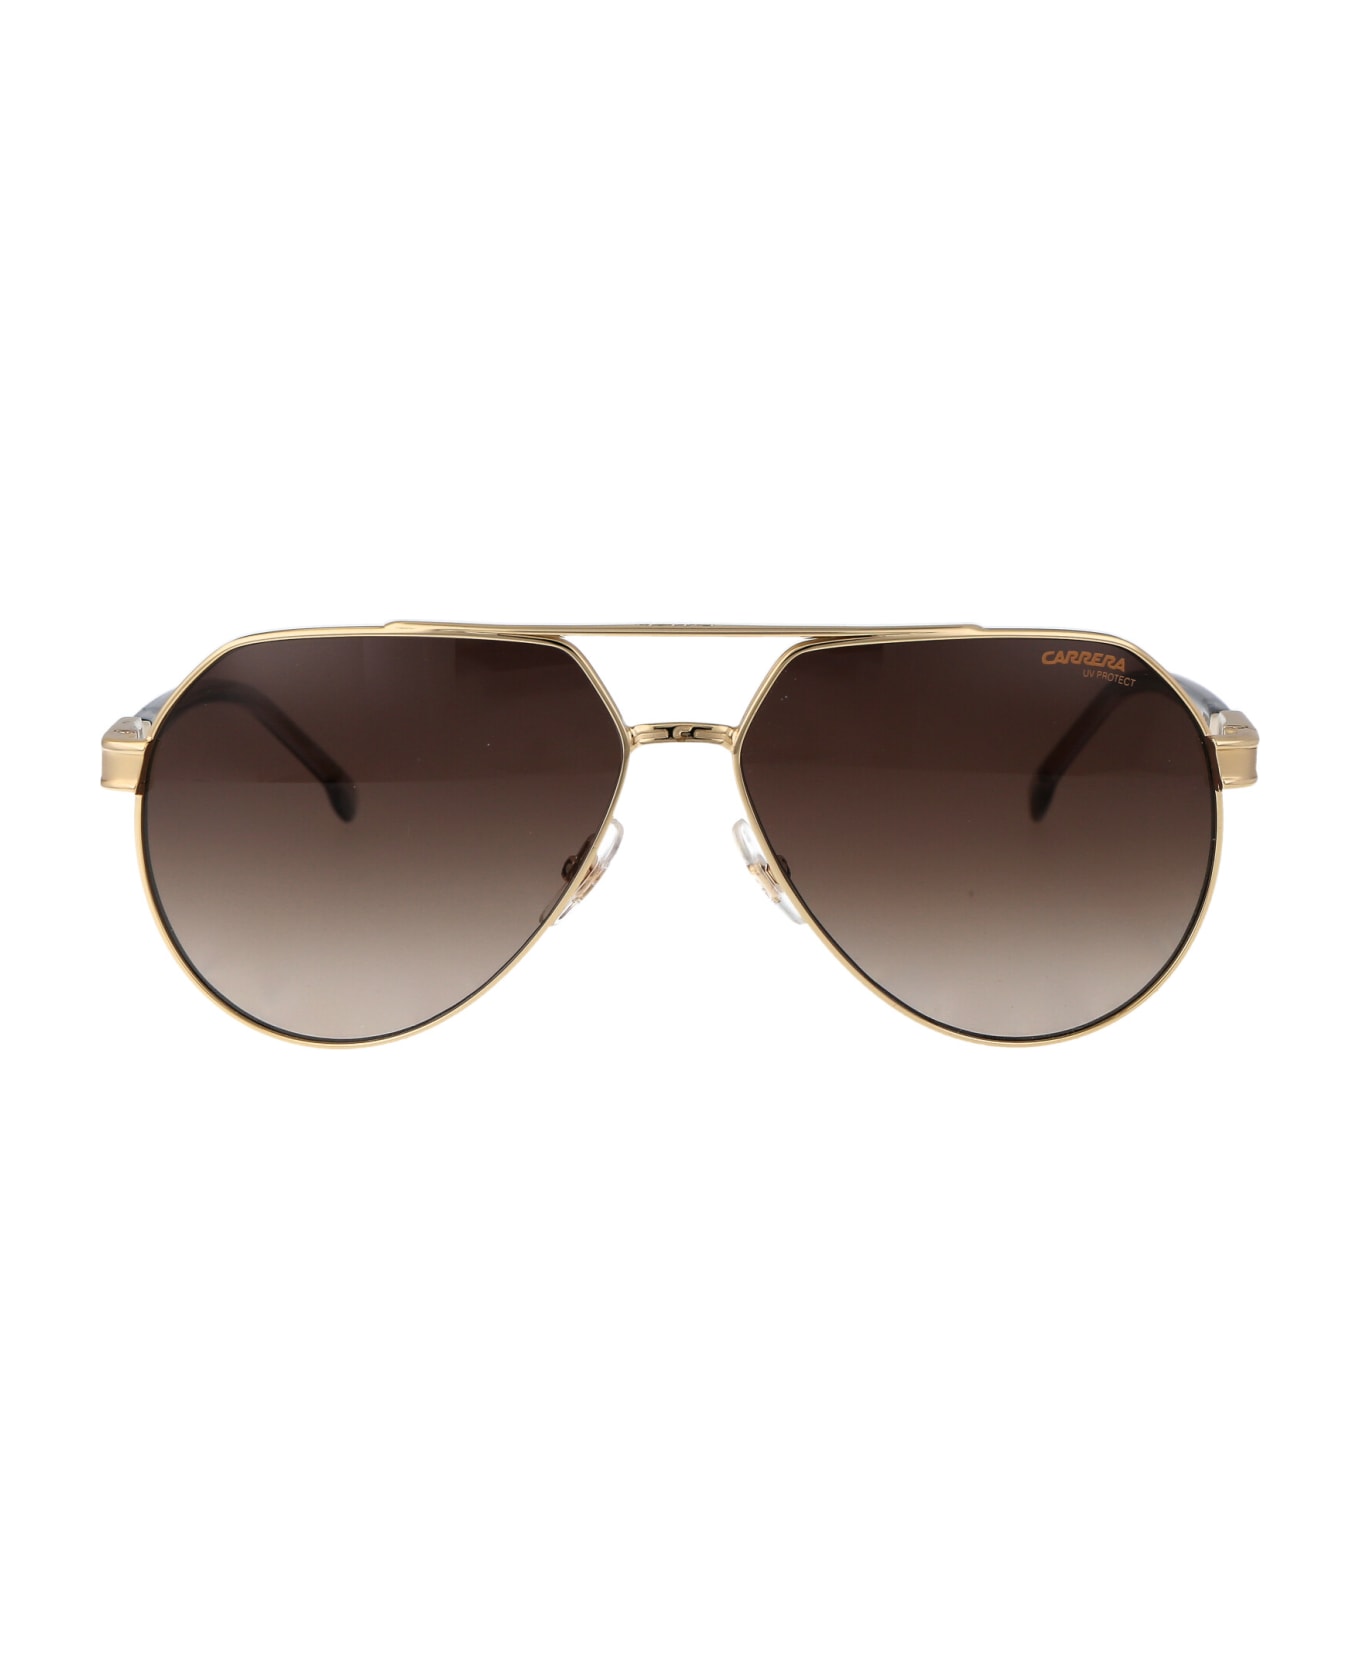 Carrera 1067/s Sunglasses - 2F7HA GOLD GREY サングラス